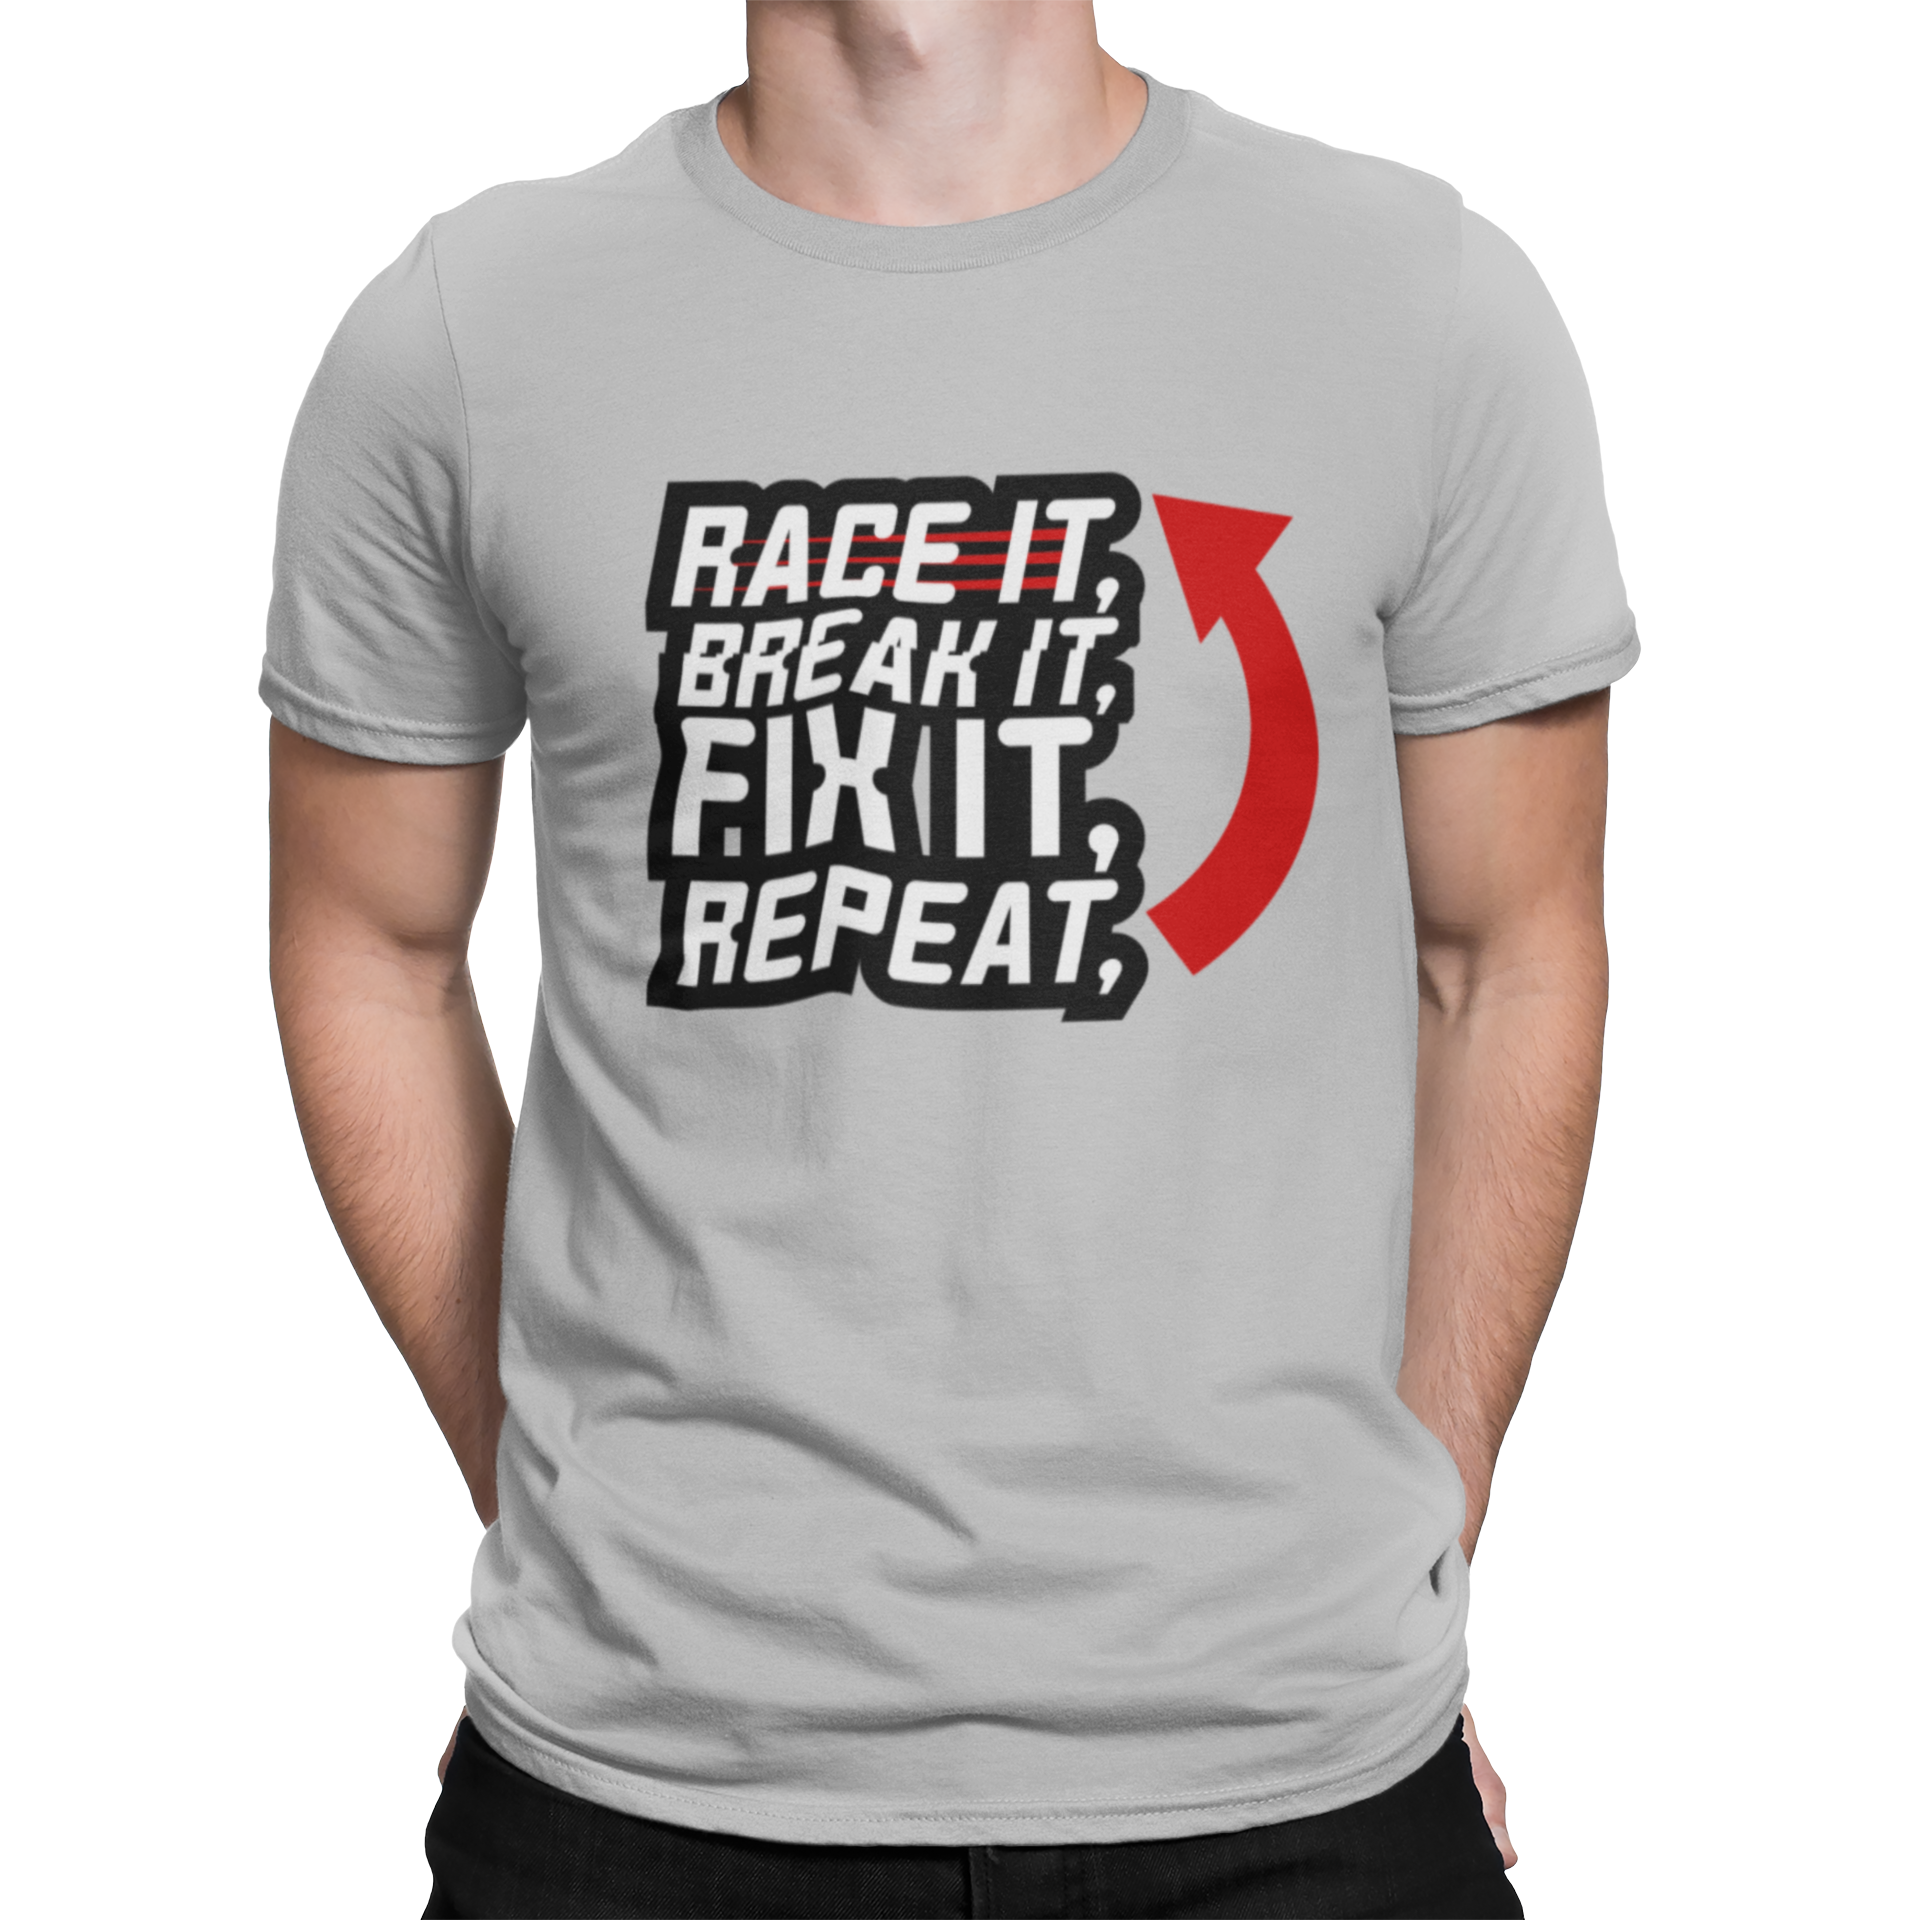 Camiseta "Race it, break it, fix it, repeat"